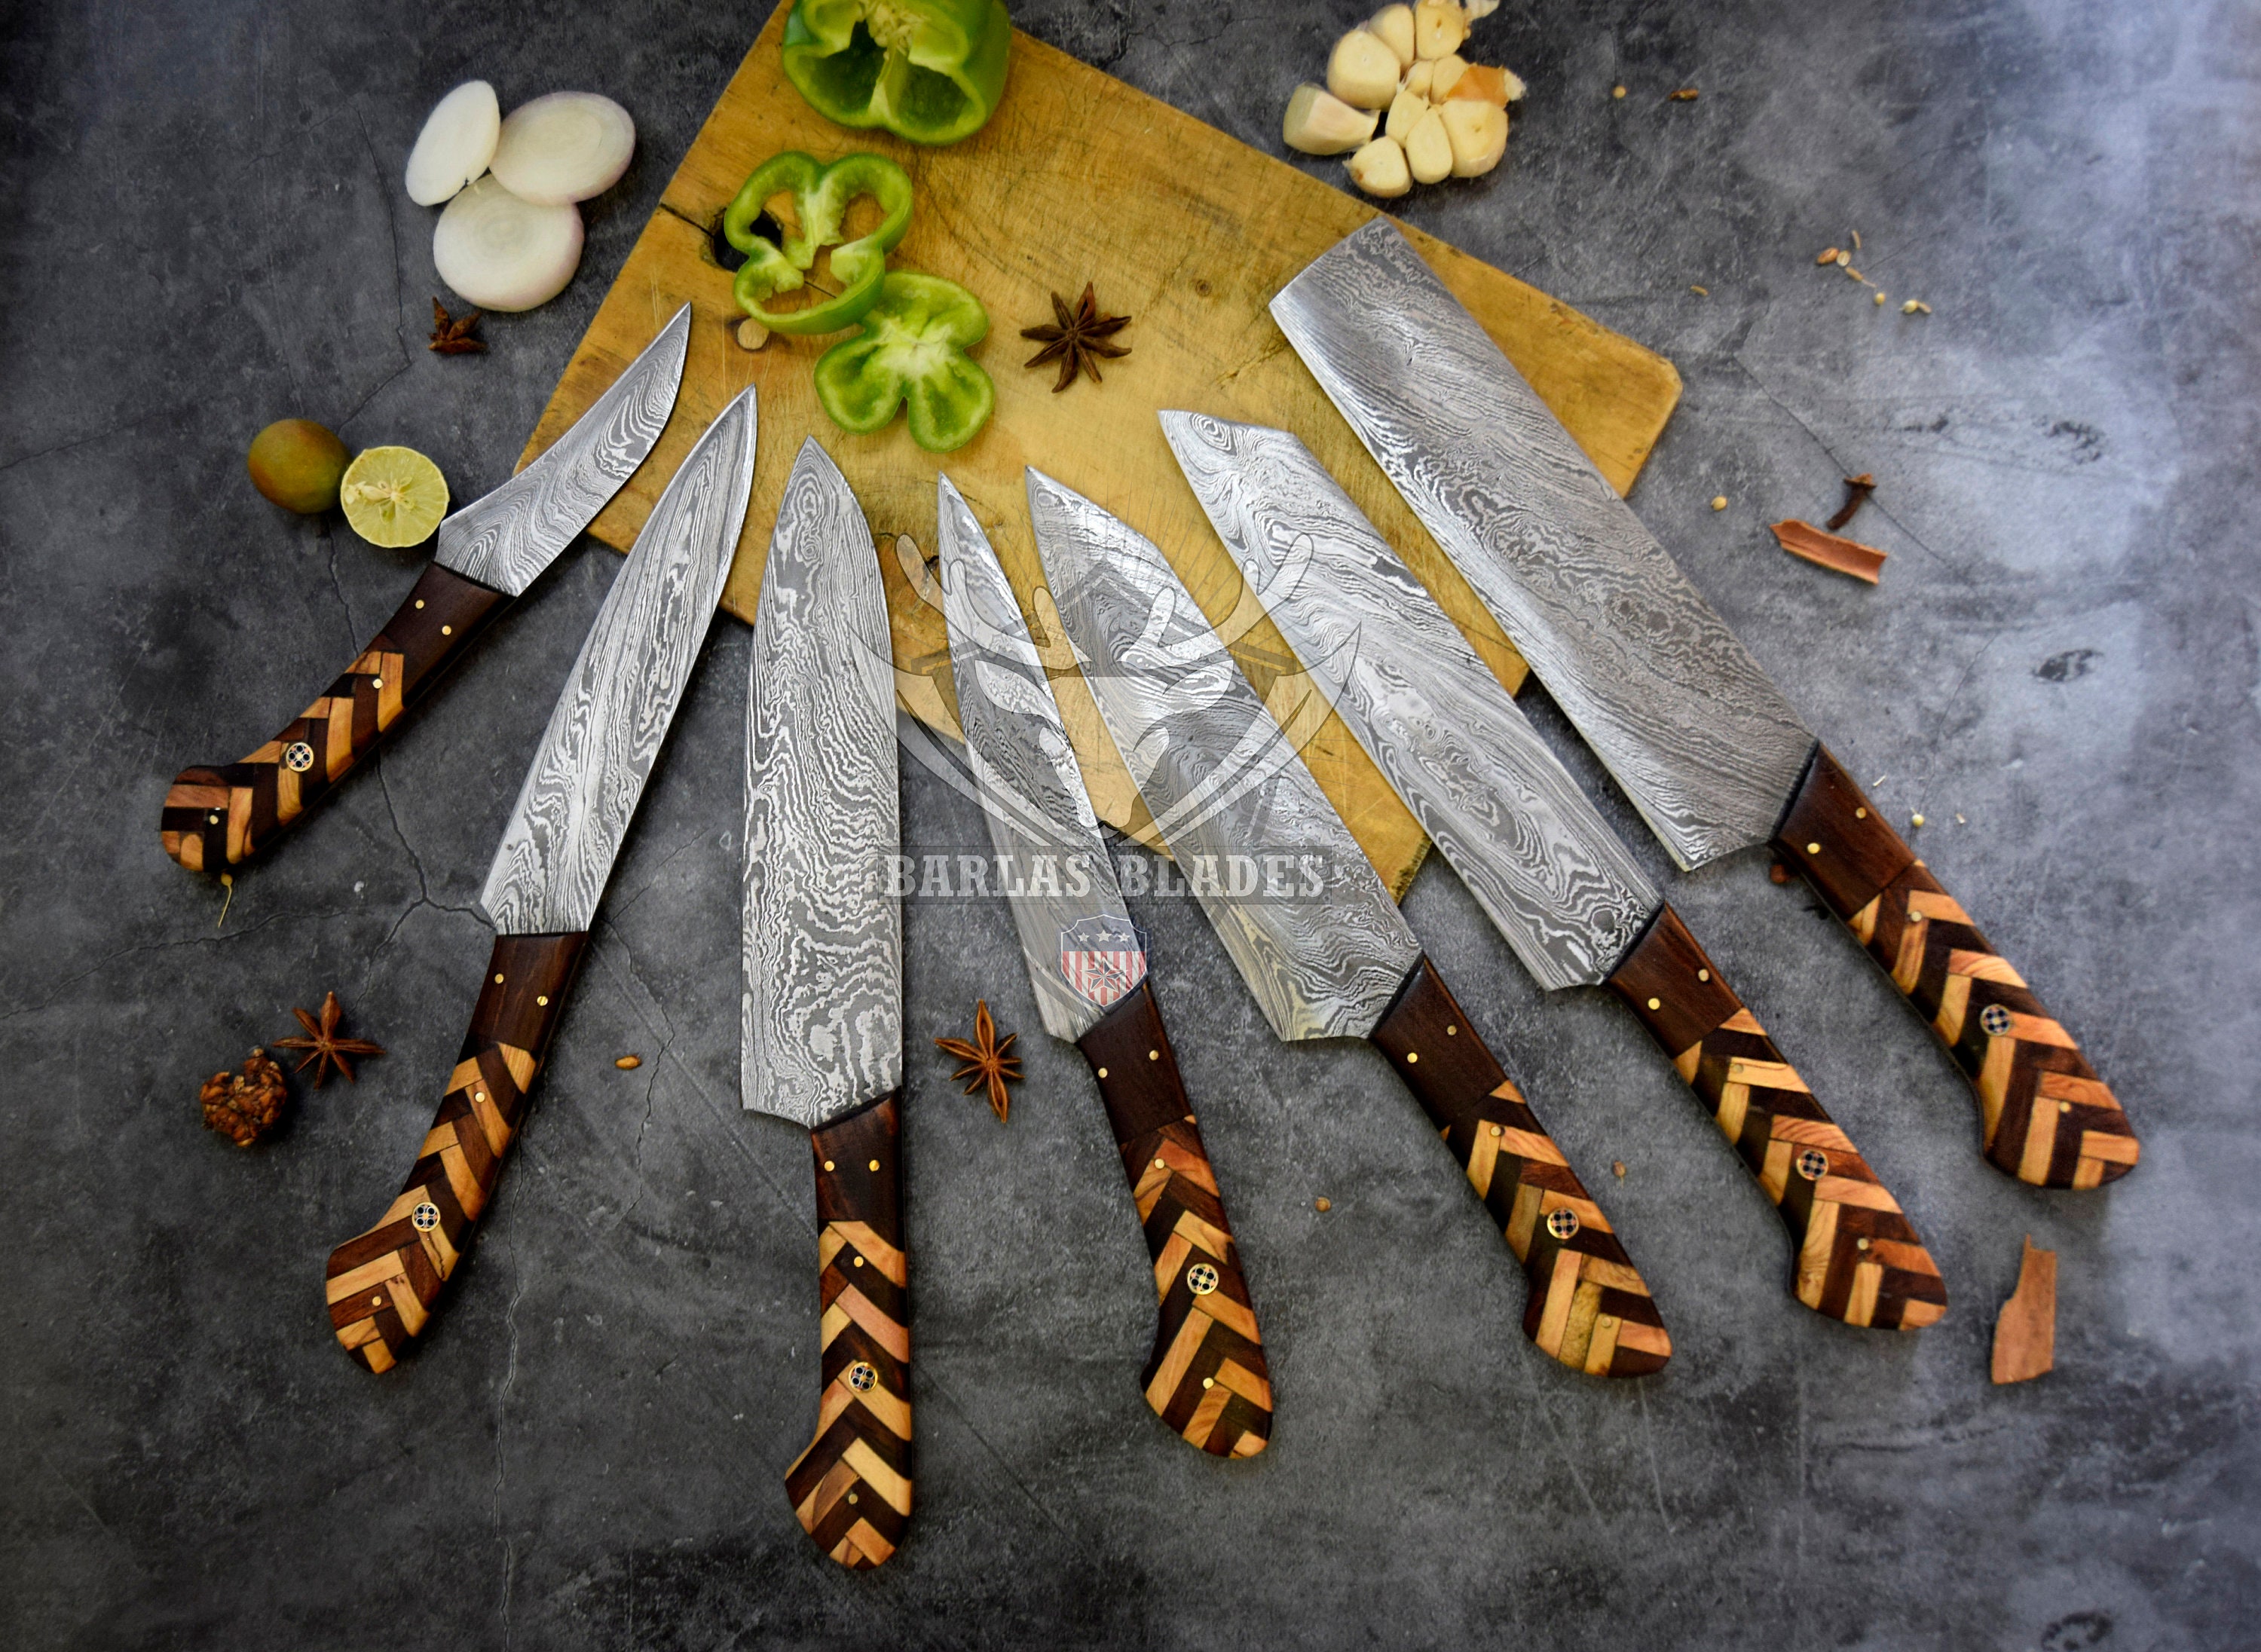 Damascus Steel Steak Knife Set Unique Camel Bone Handles Sharp Edge Blades  , Table Steak Knives With Leather Roll , Best Gift Item Christmas 